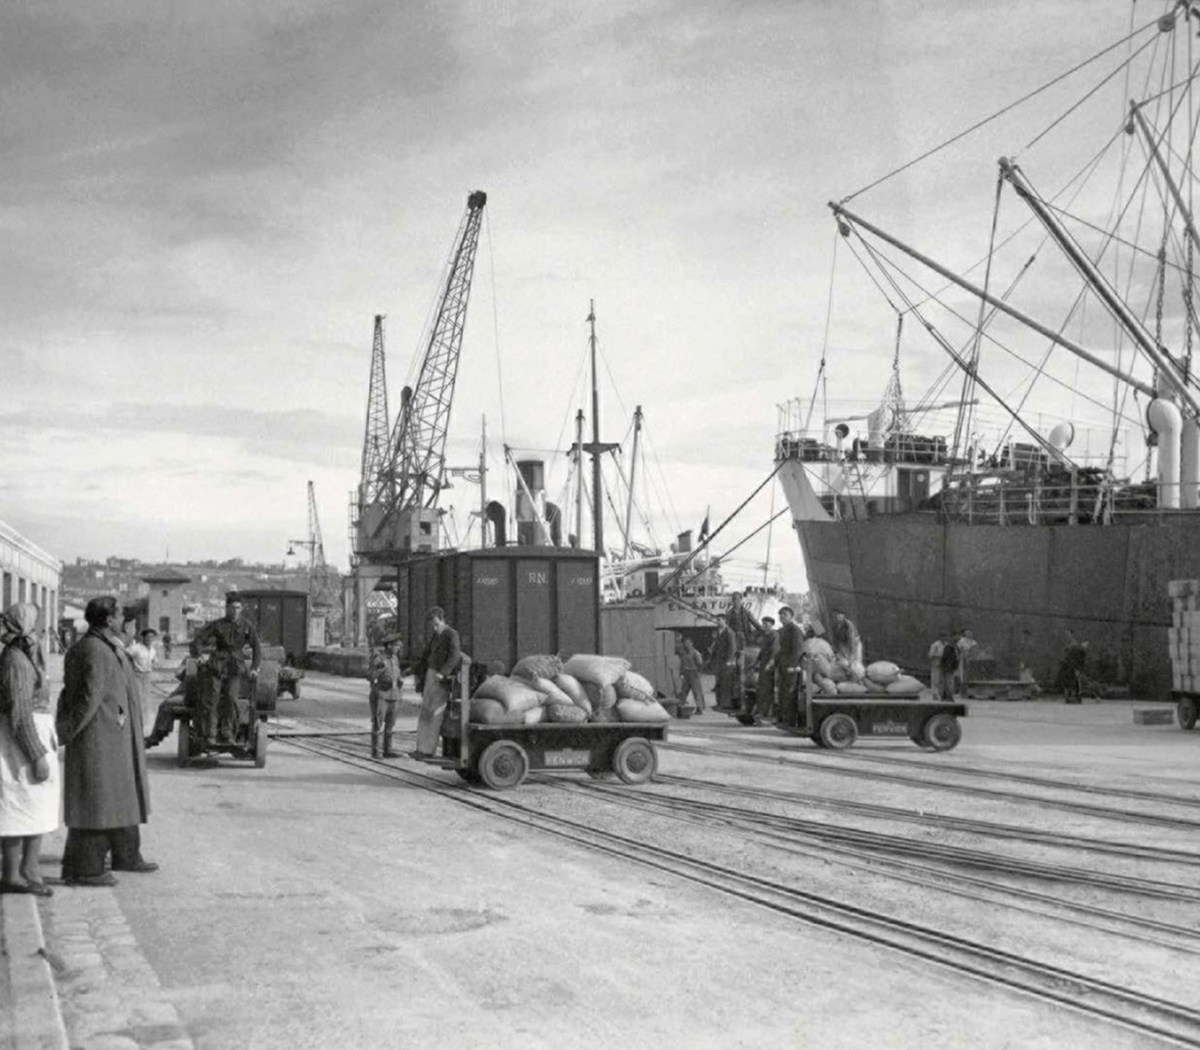 Port activity in the Maliaño docks of the port of Santander in 1940